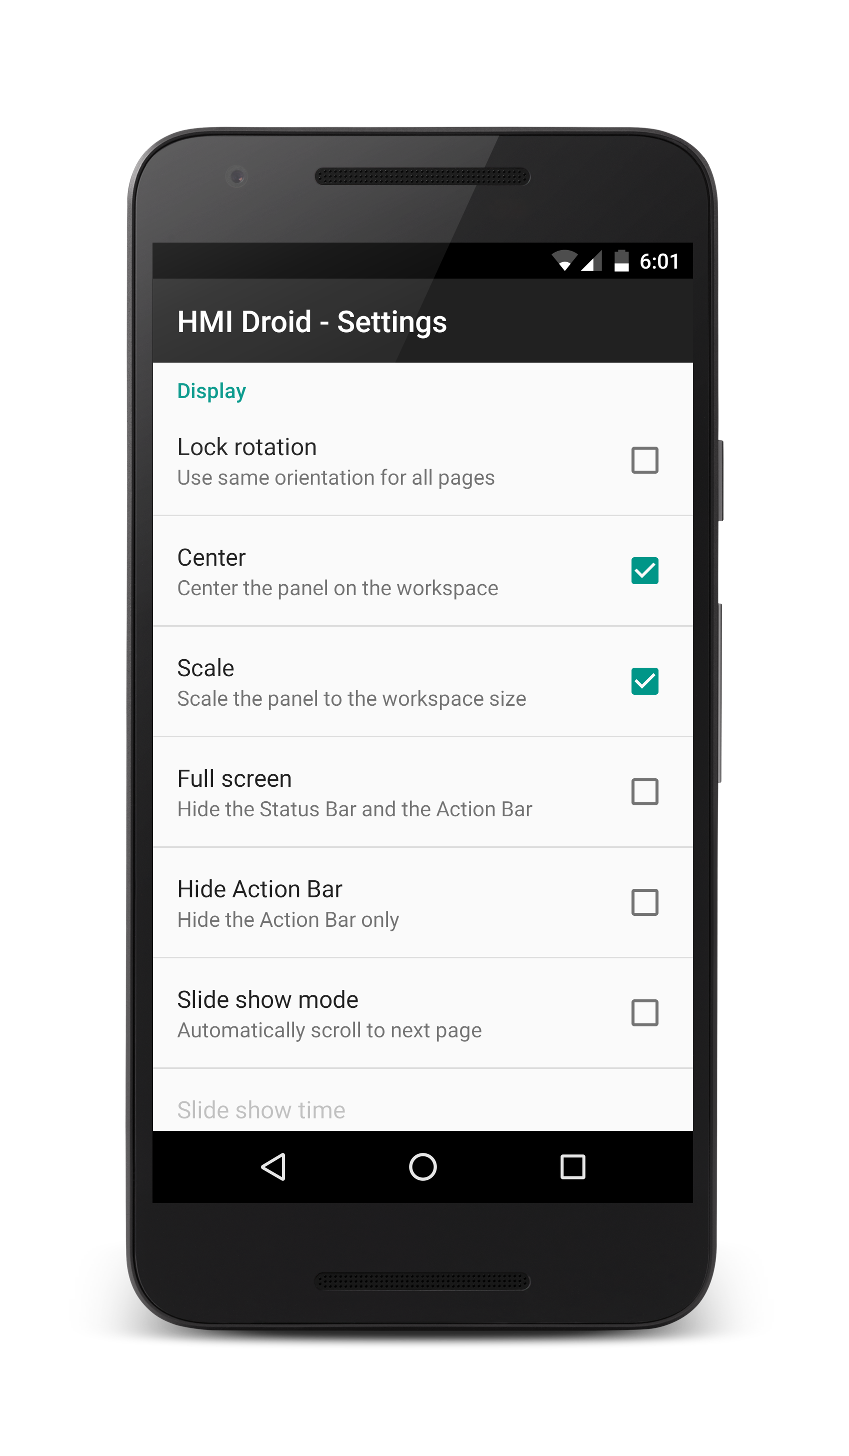 HMI Droid - Settings for Display